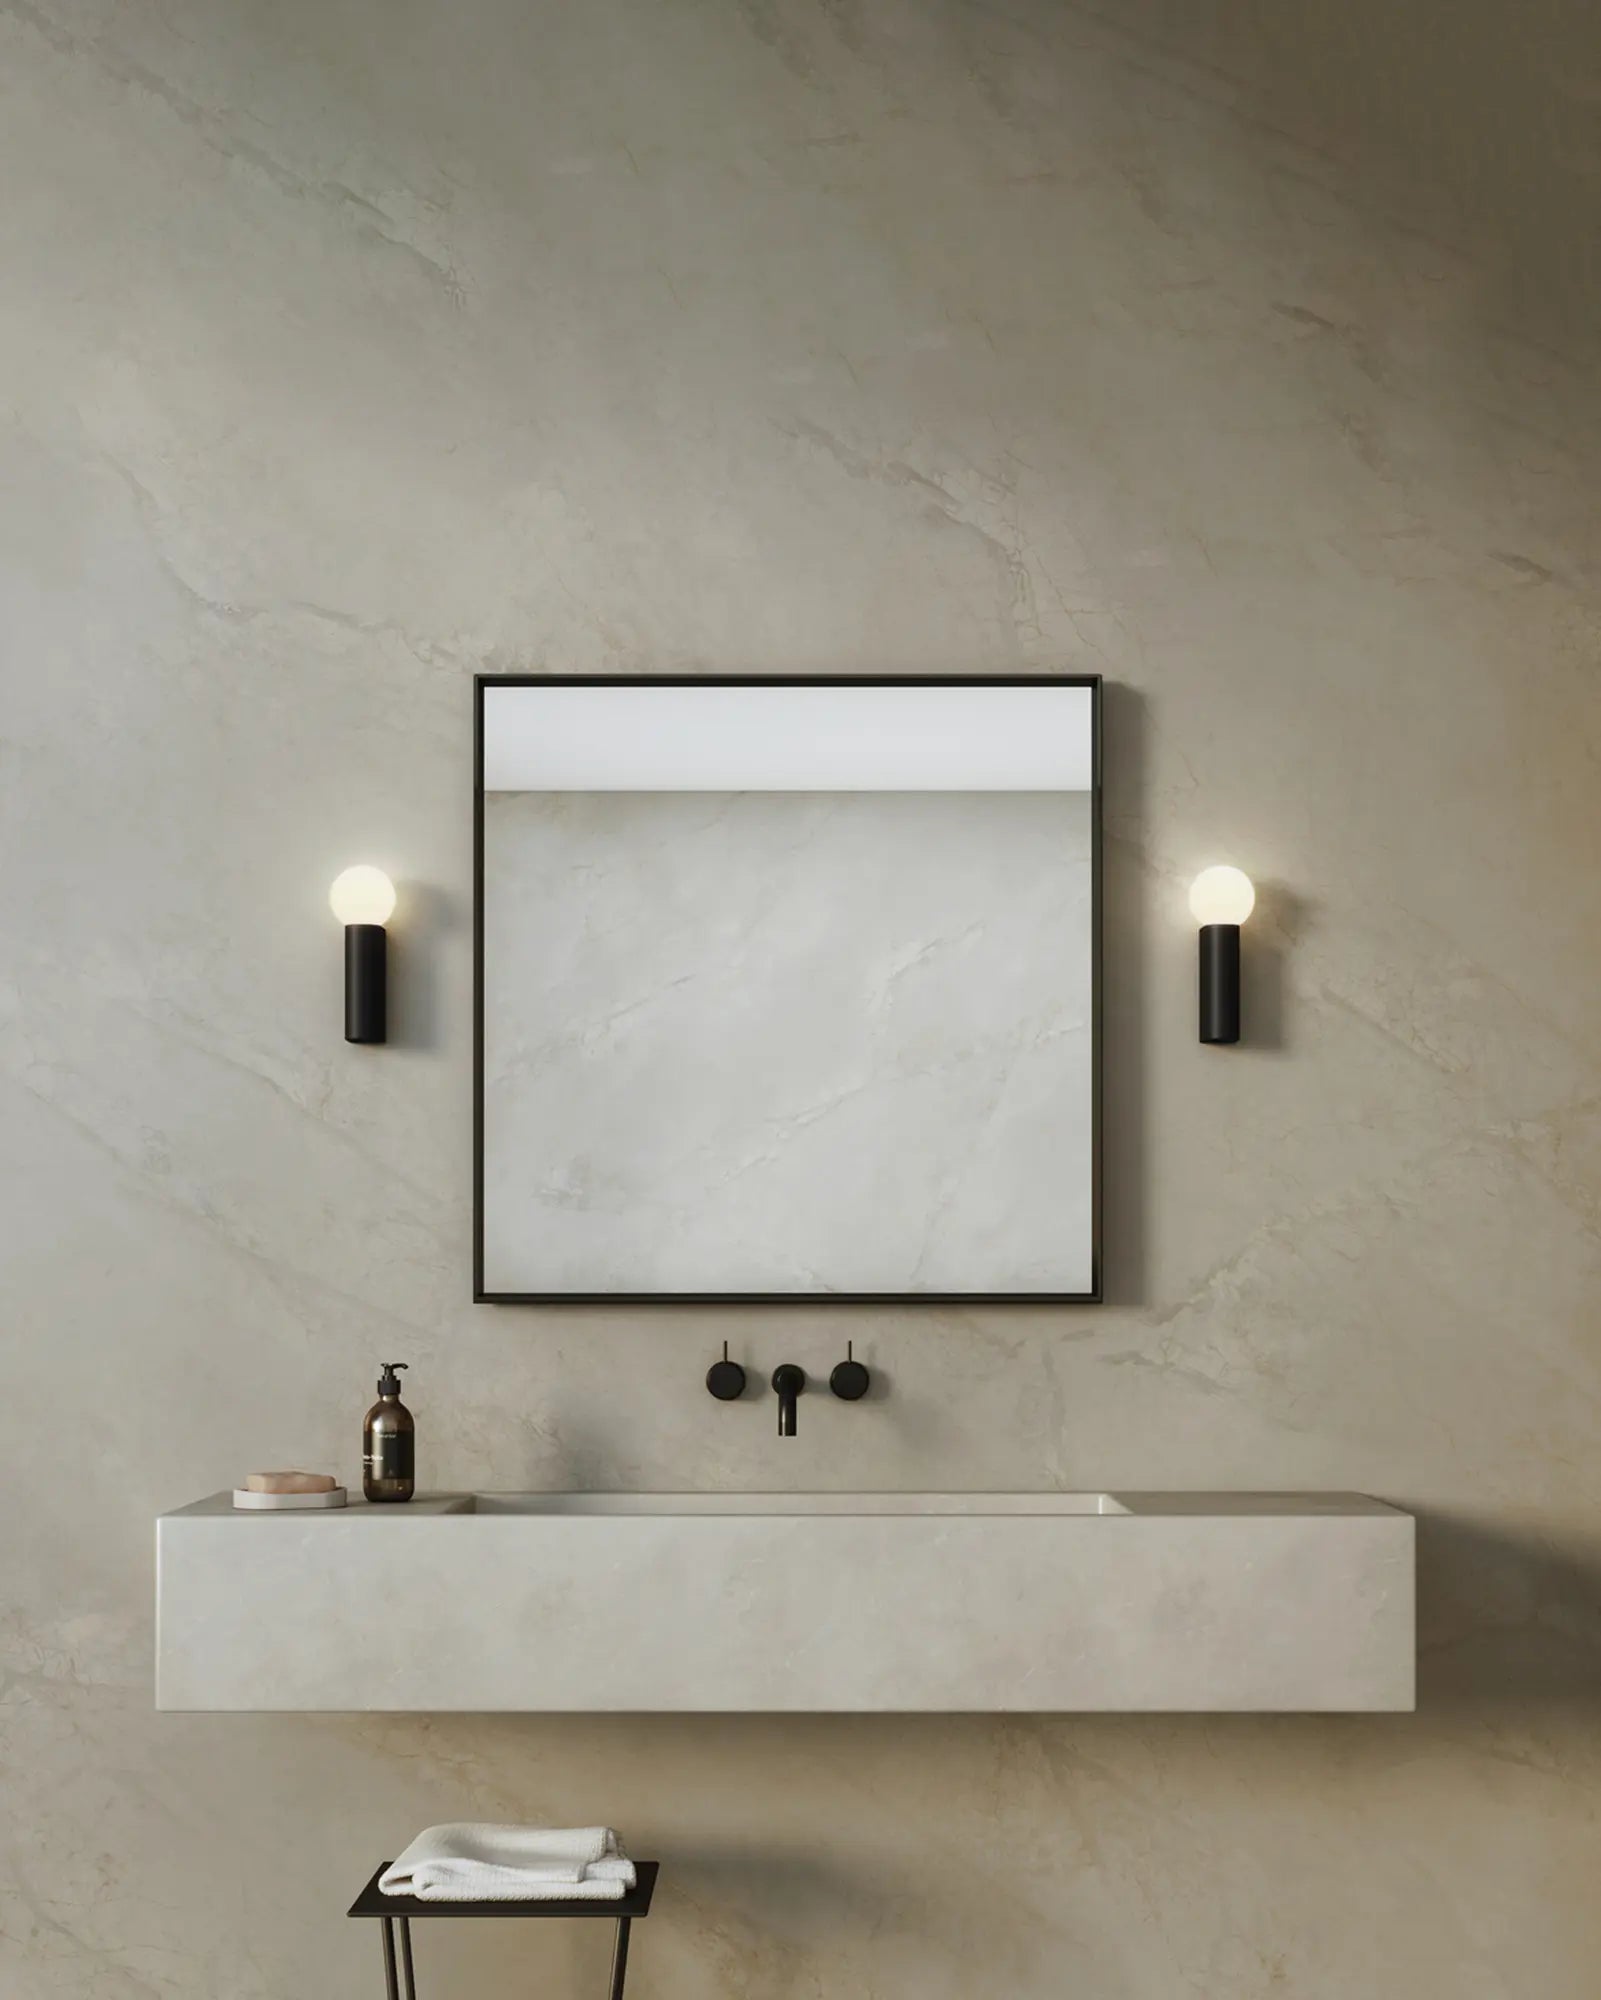 Ortona Single Wall Light in black bathroom mirror's sides